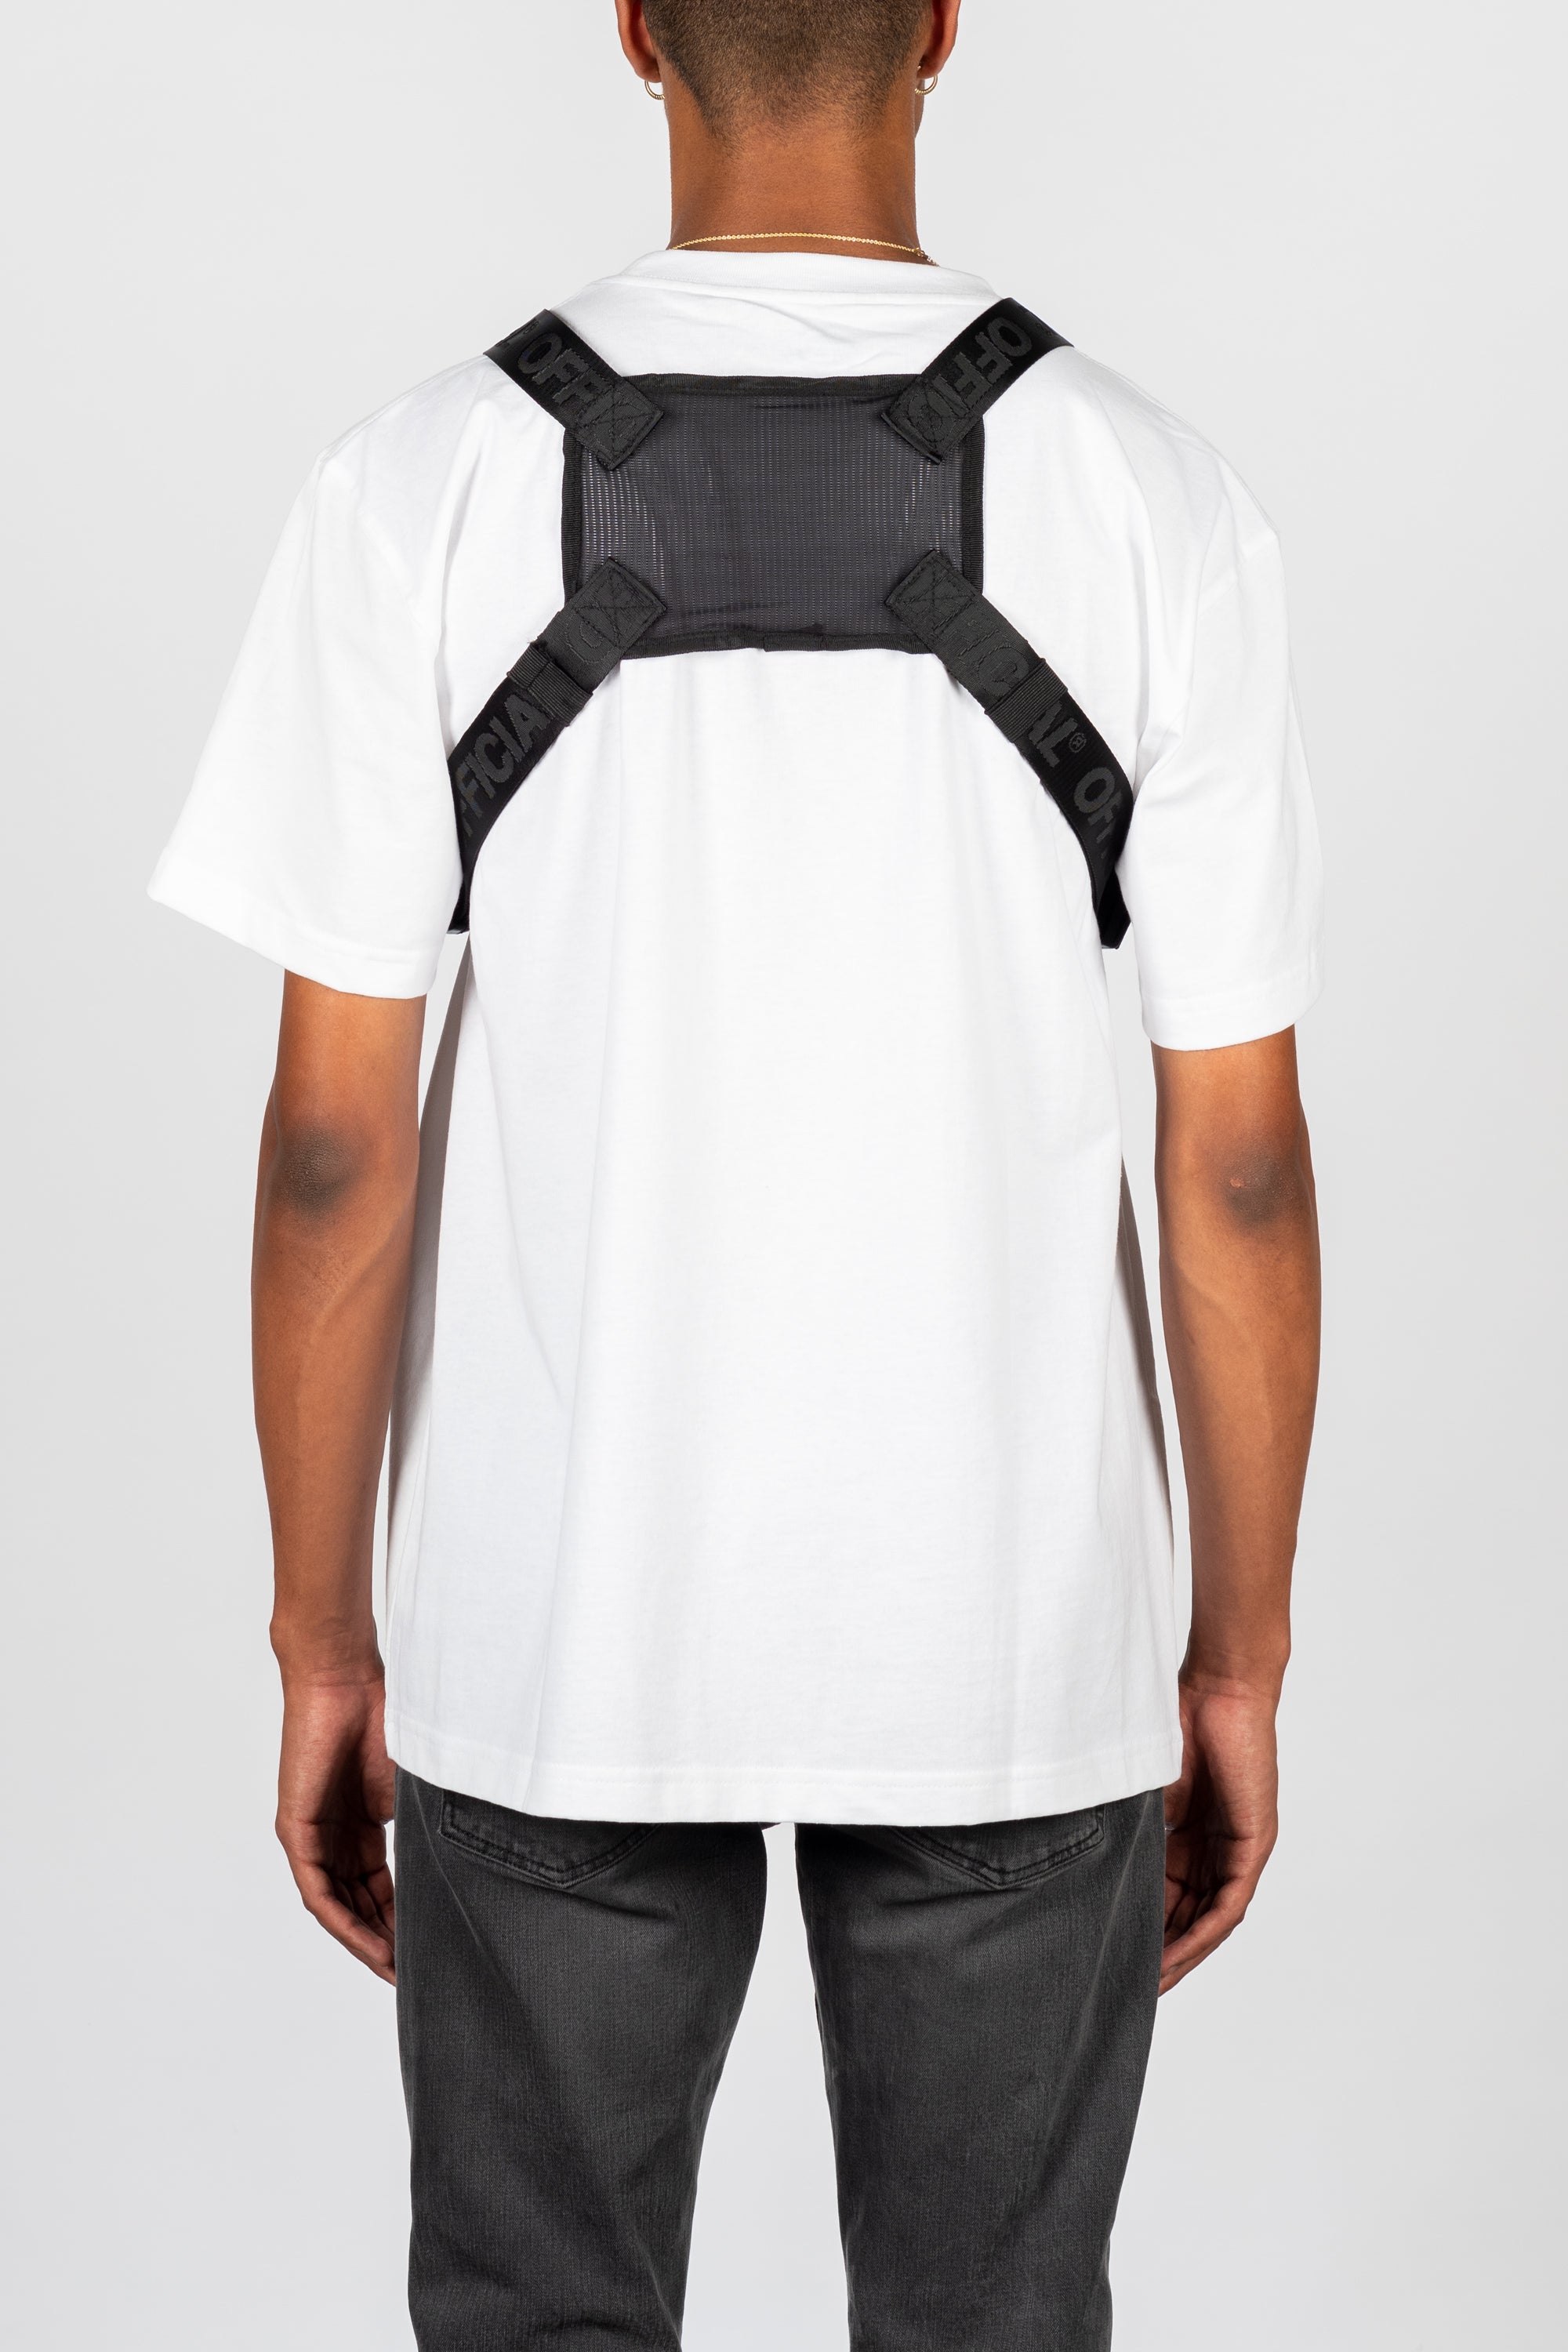 Melrose 2.0 Chest Bag (Black) - Official Brand